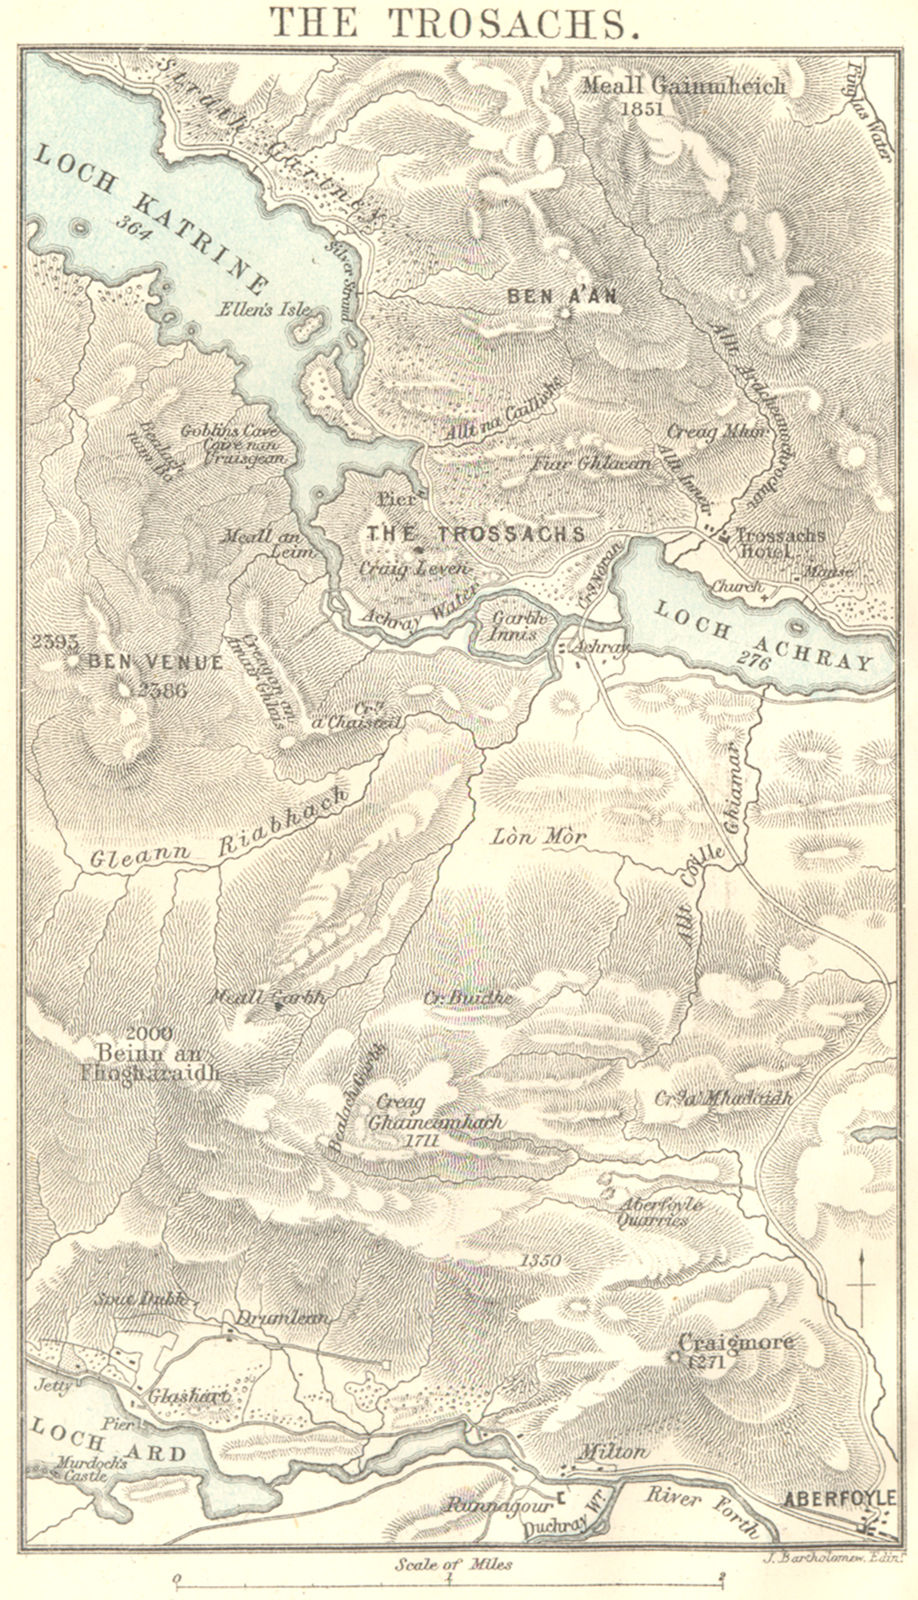 SCOTLAND. The Trossachs Trosachs. Loch Katrine & Loch Achray 1887 old map